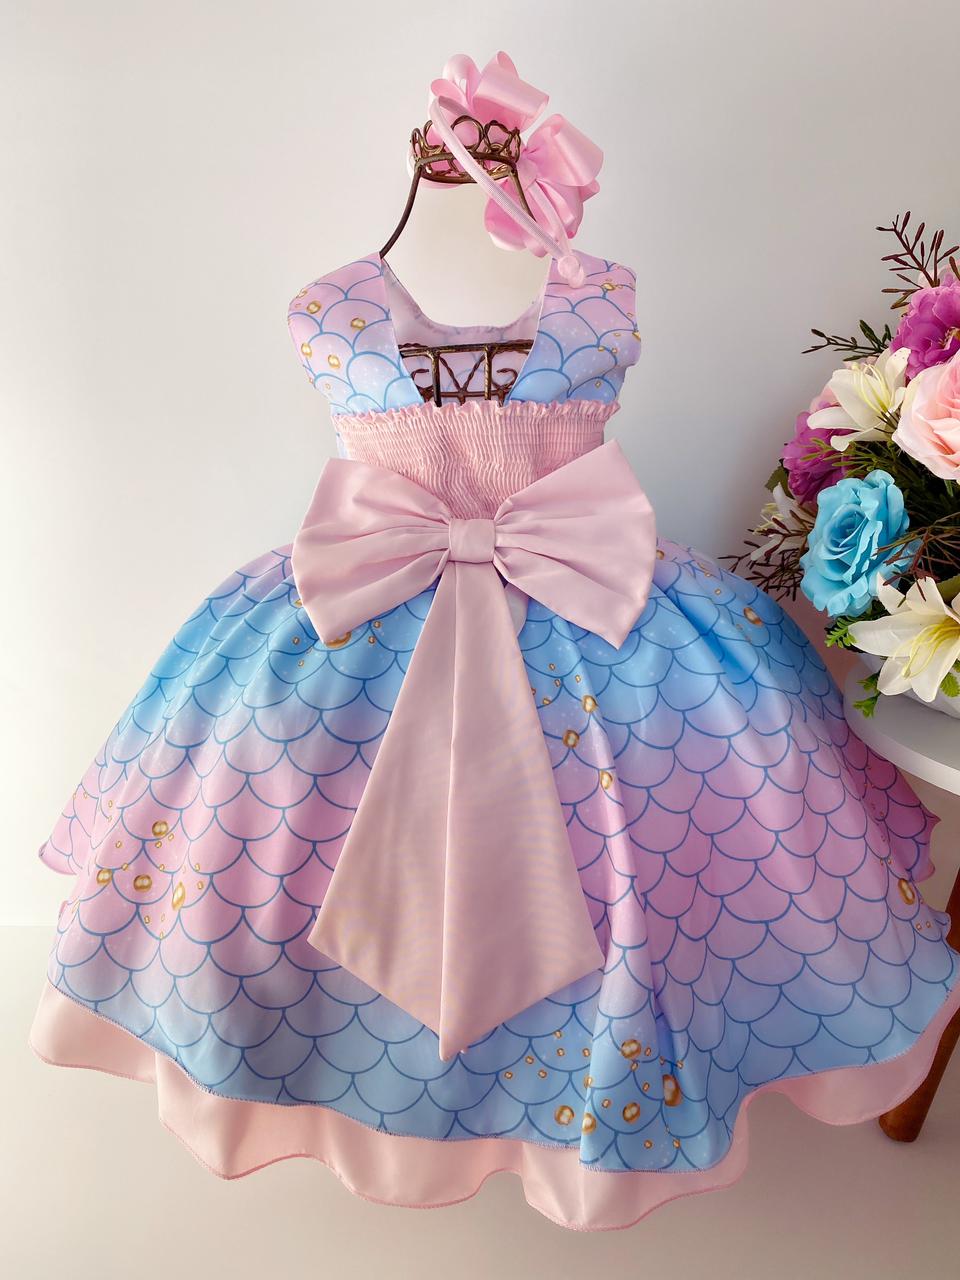 Vestido Infantil de Festa Longo Rosê Luxo Princesa